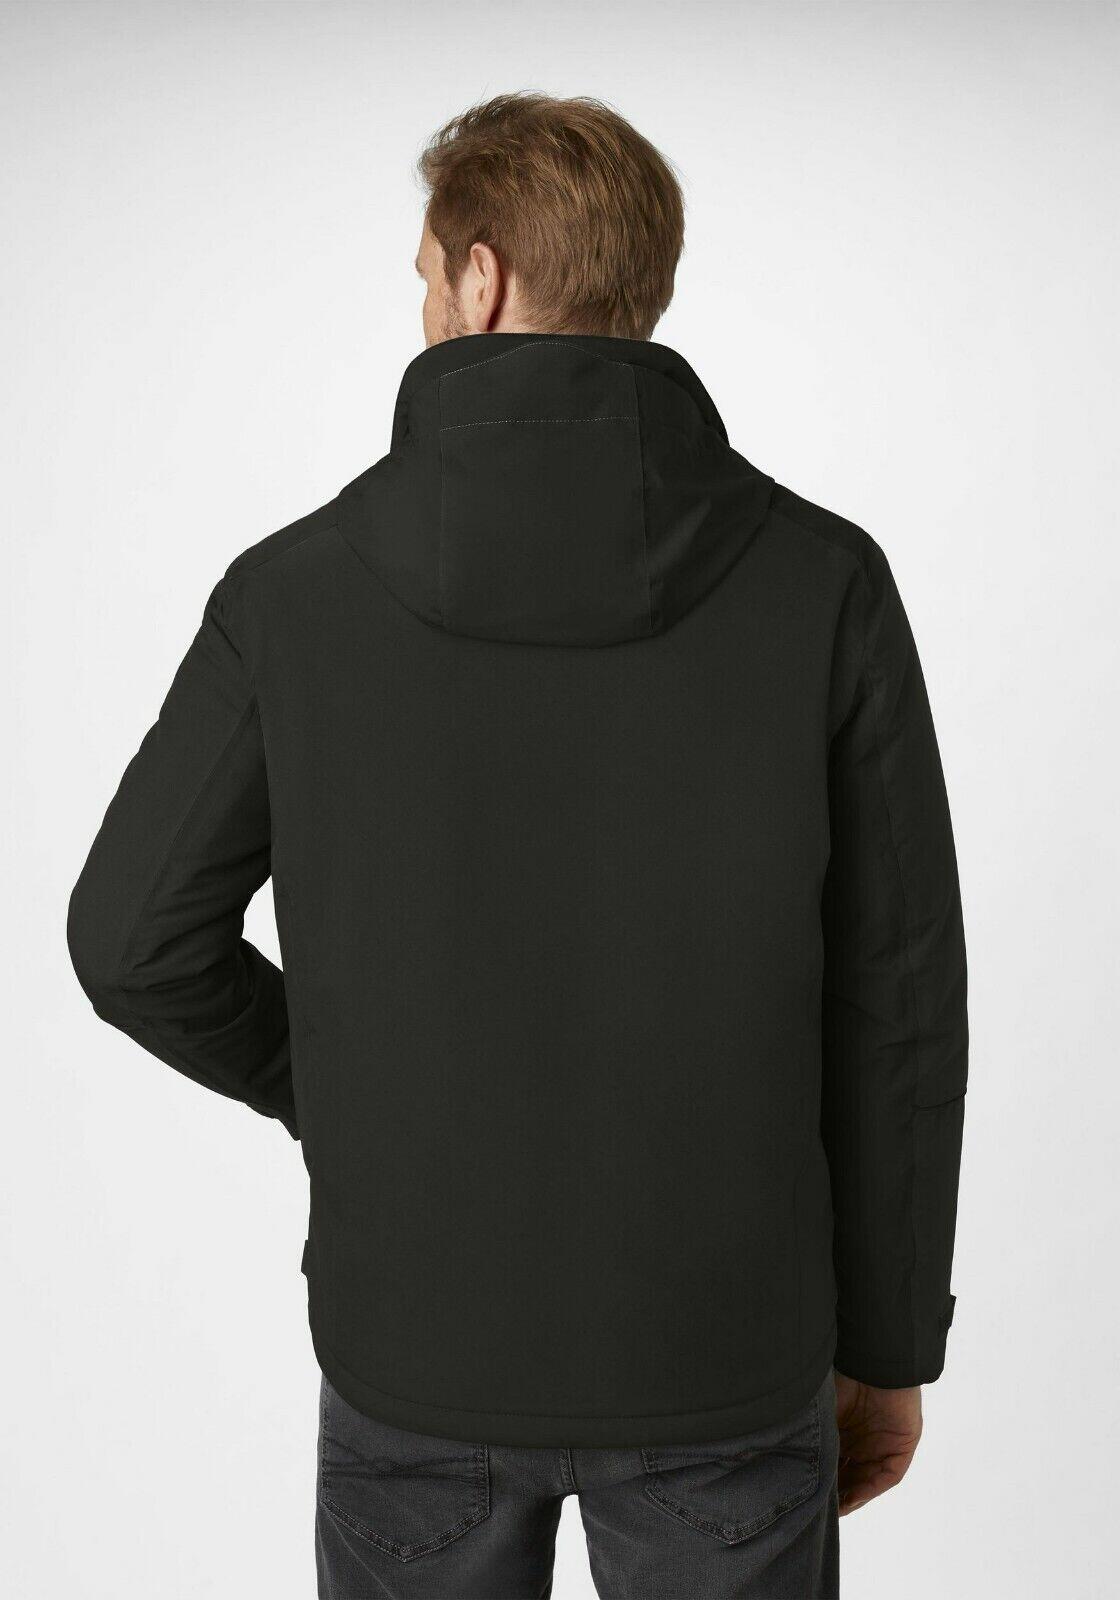 Redpoint Functional Jacket Len Waterproof outdoor with Protex Function ...